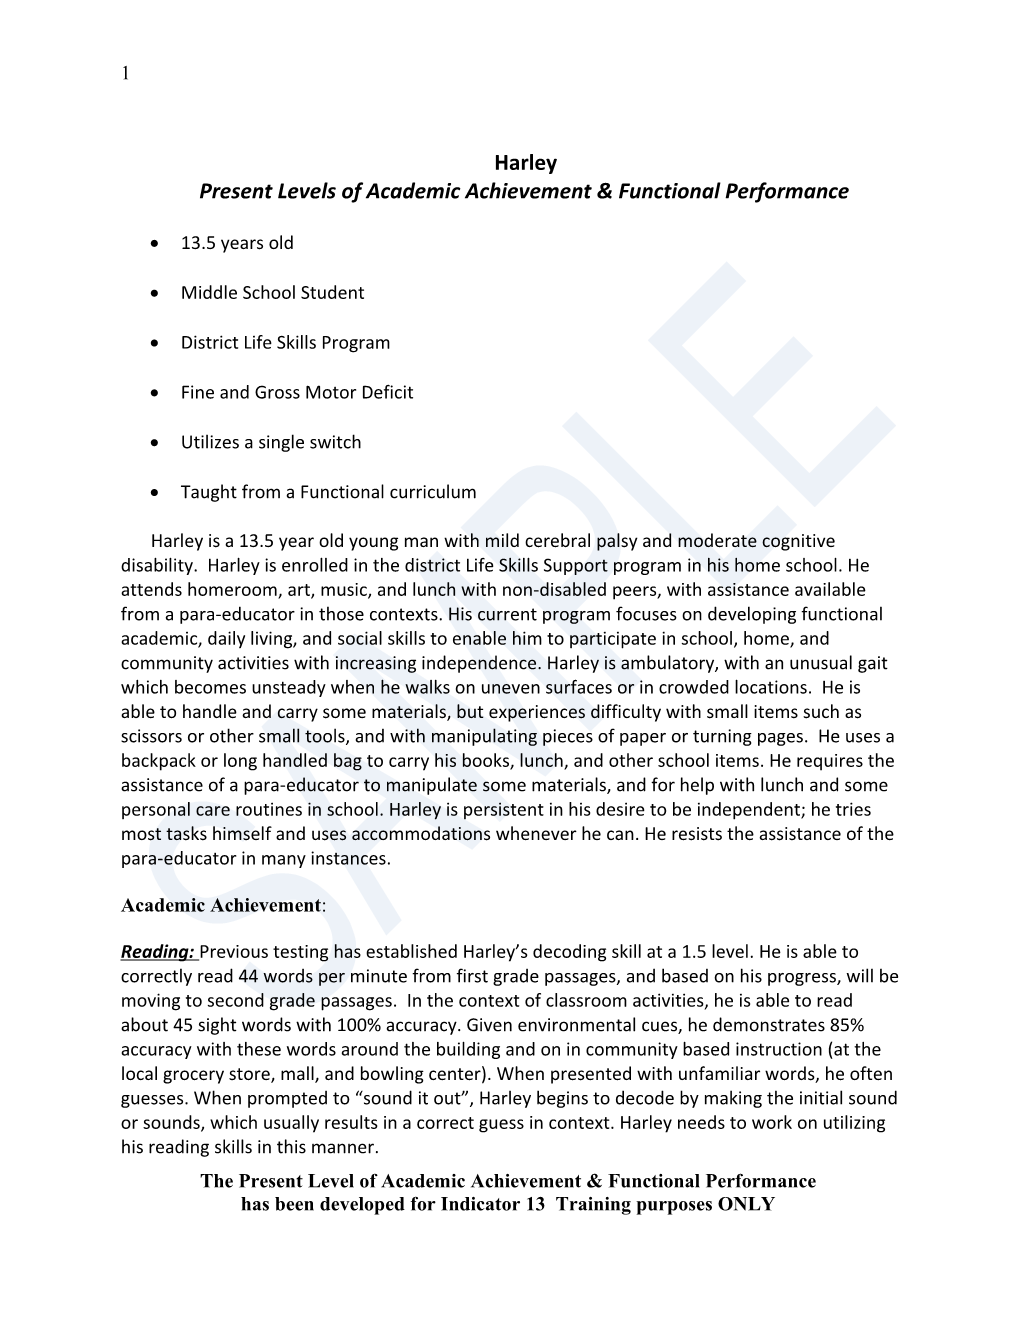 Present Levels of Academic Achievement & Functional Performance